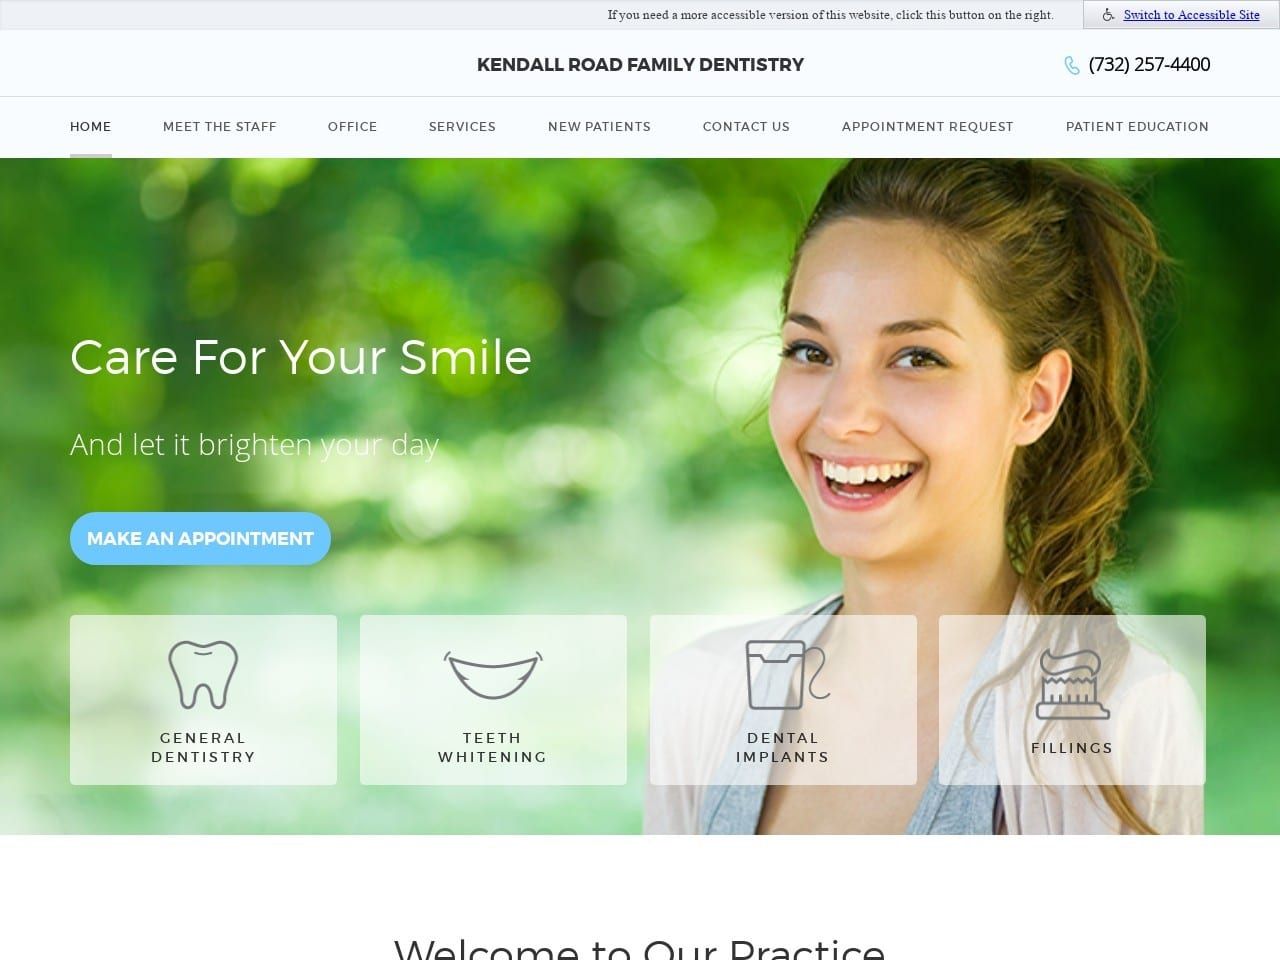 Kendall Road Family Dentist Website Screenshot from kendallroadfamilydentistry.com